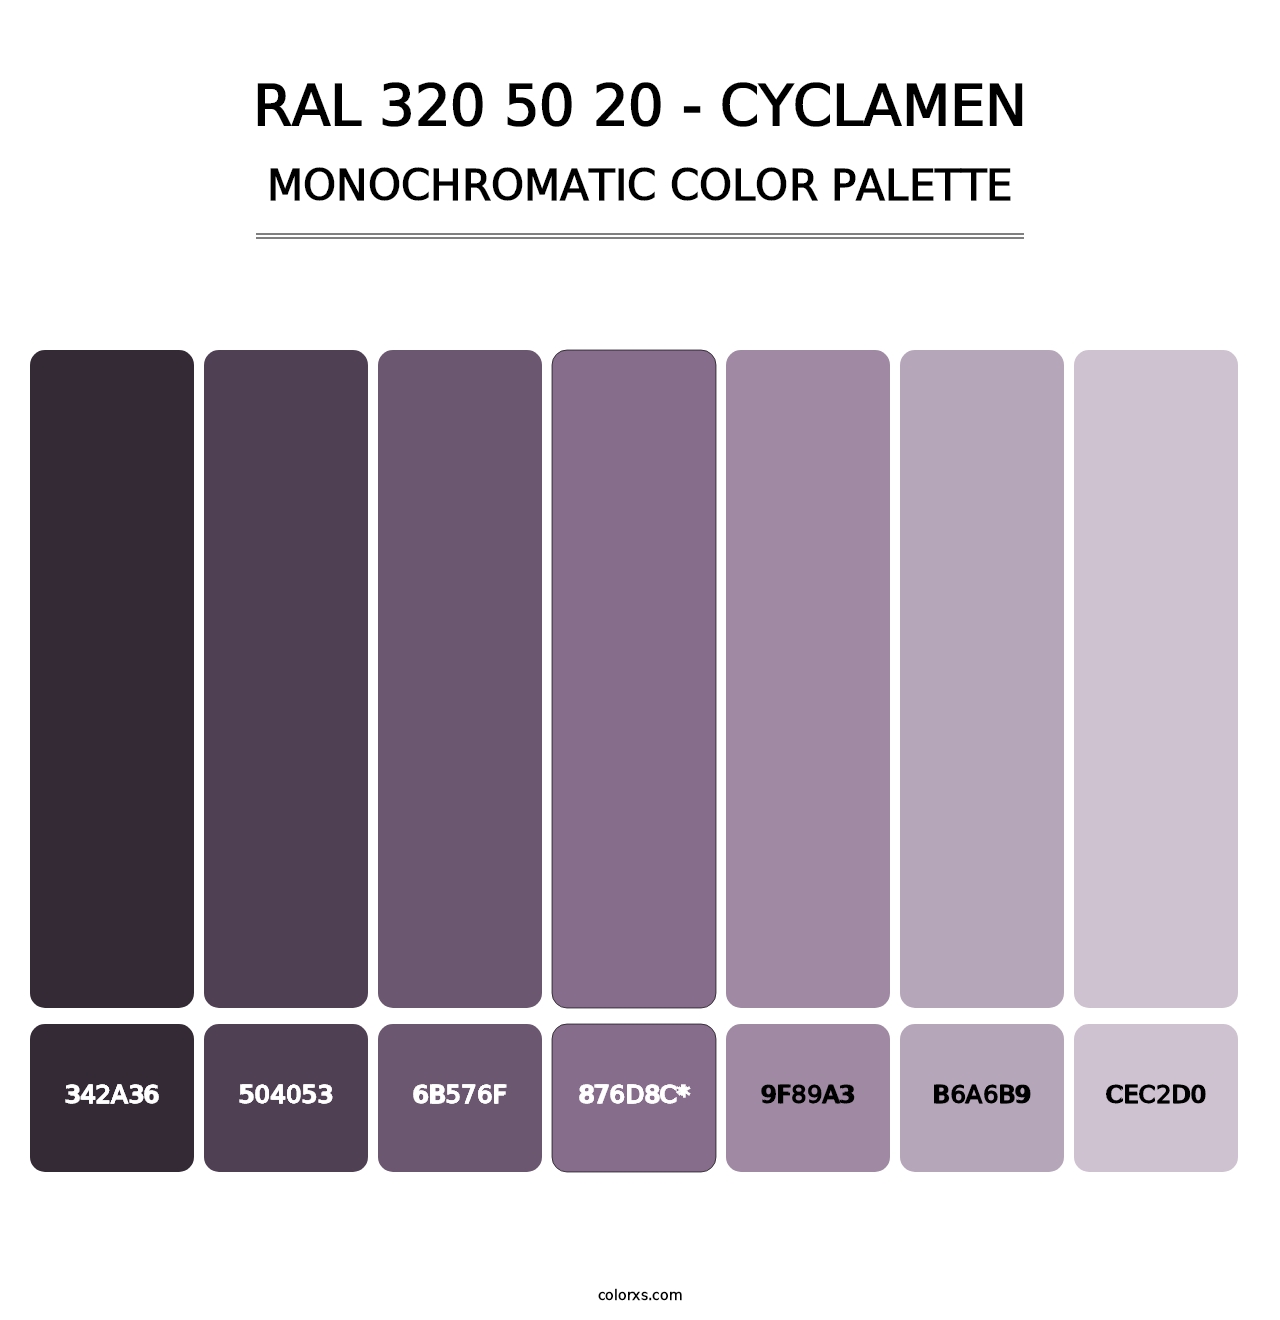 RAL 320 50 20 - Cyclamen - Monochromatic Color Palette